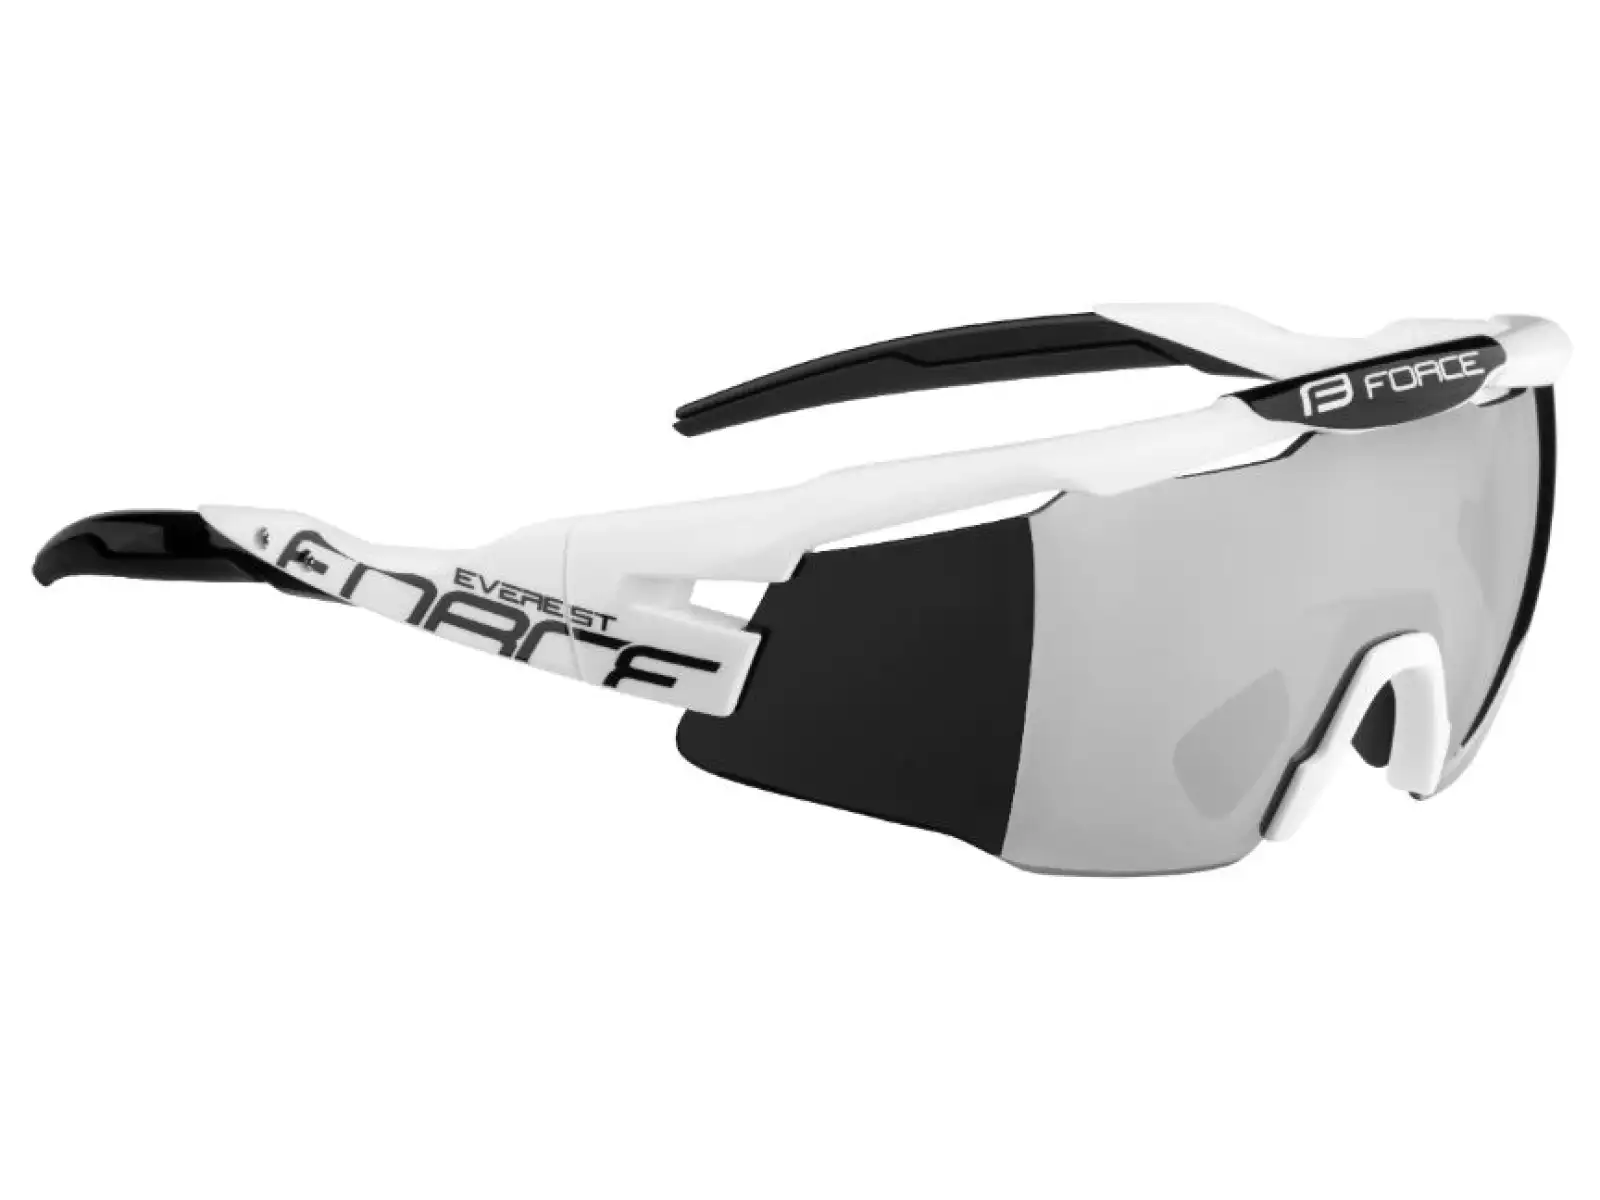 Slnečné okuliare Force Everest biele/čierne/čierne sklo